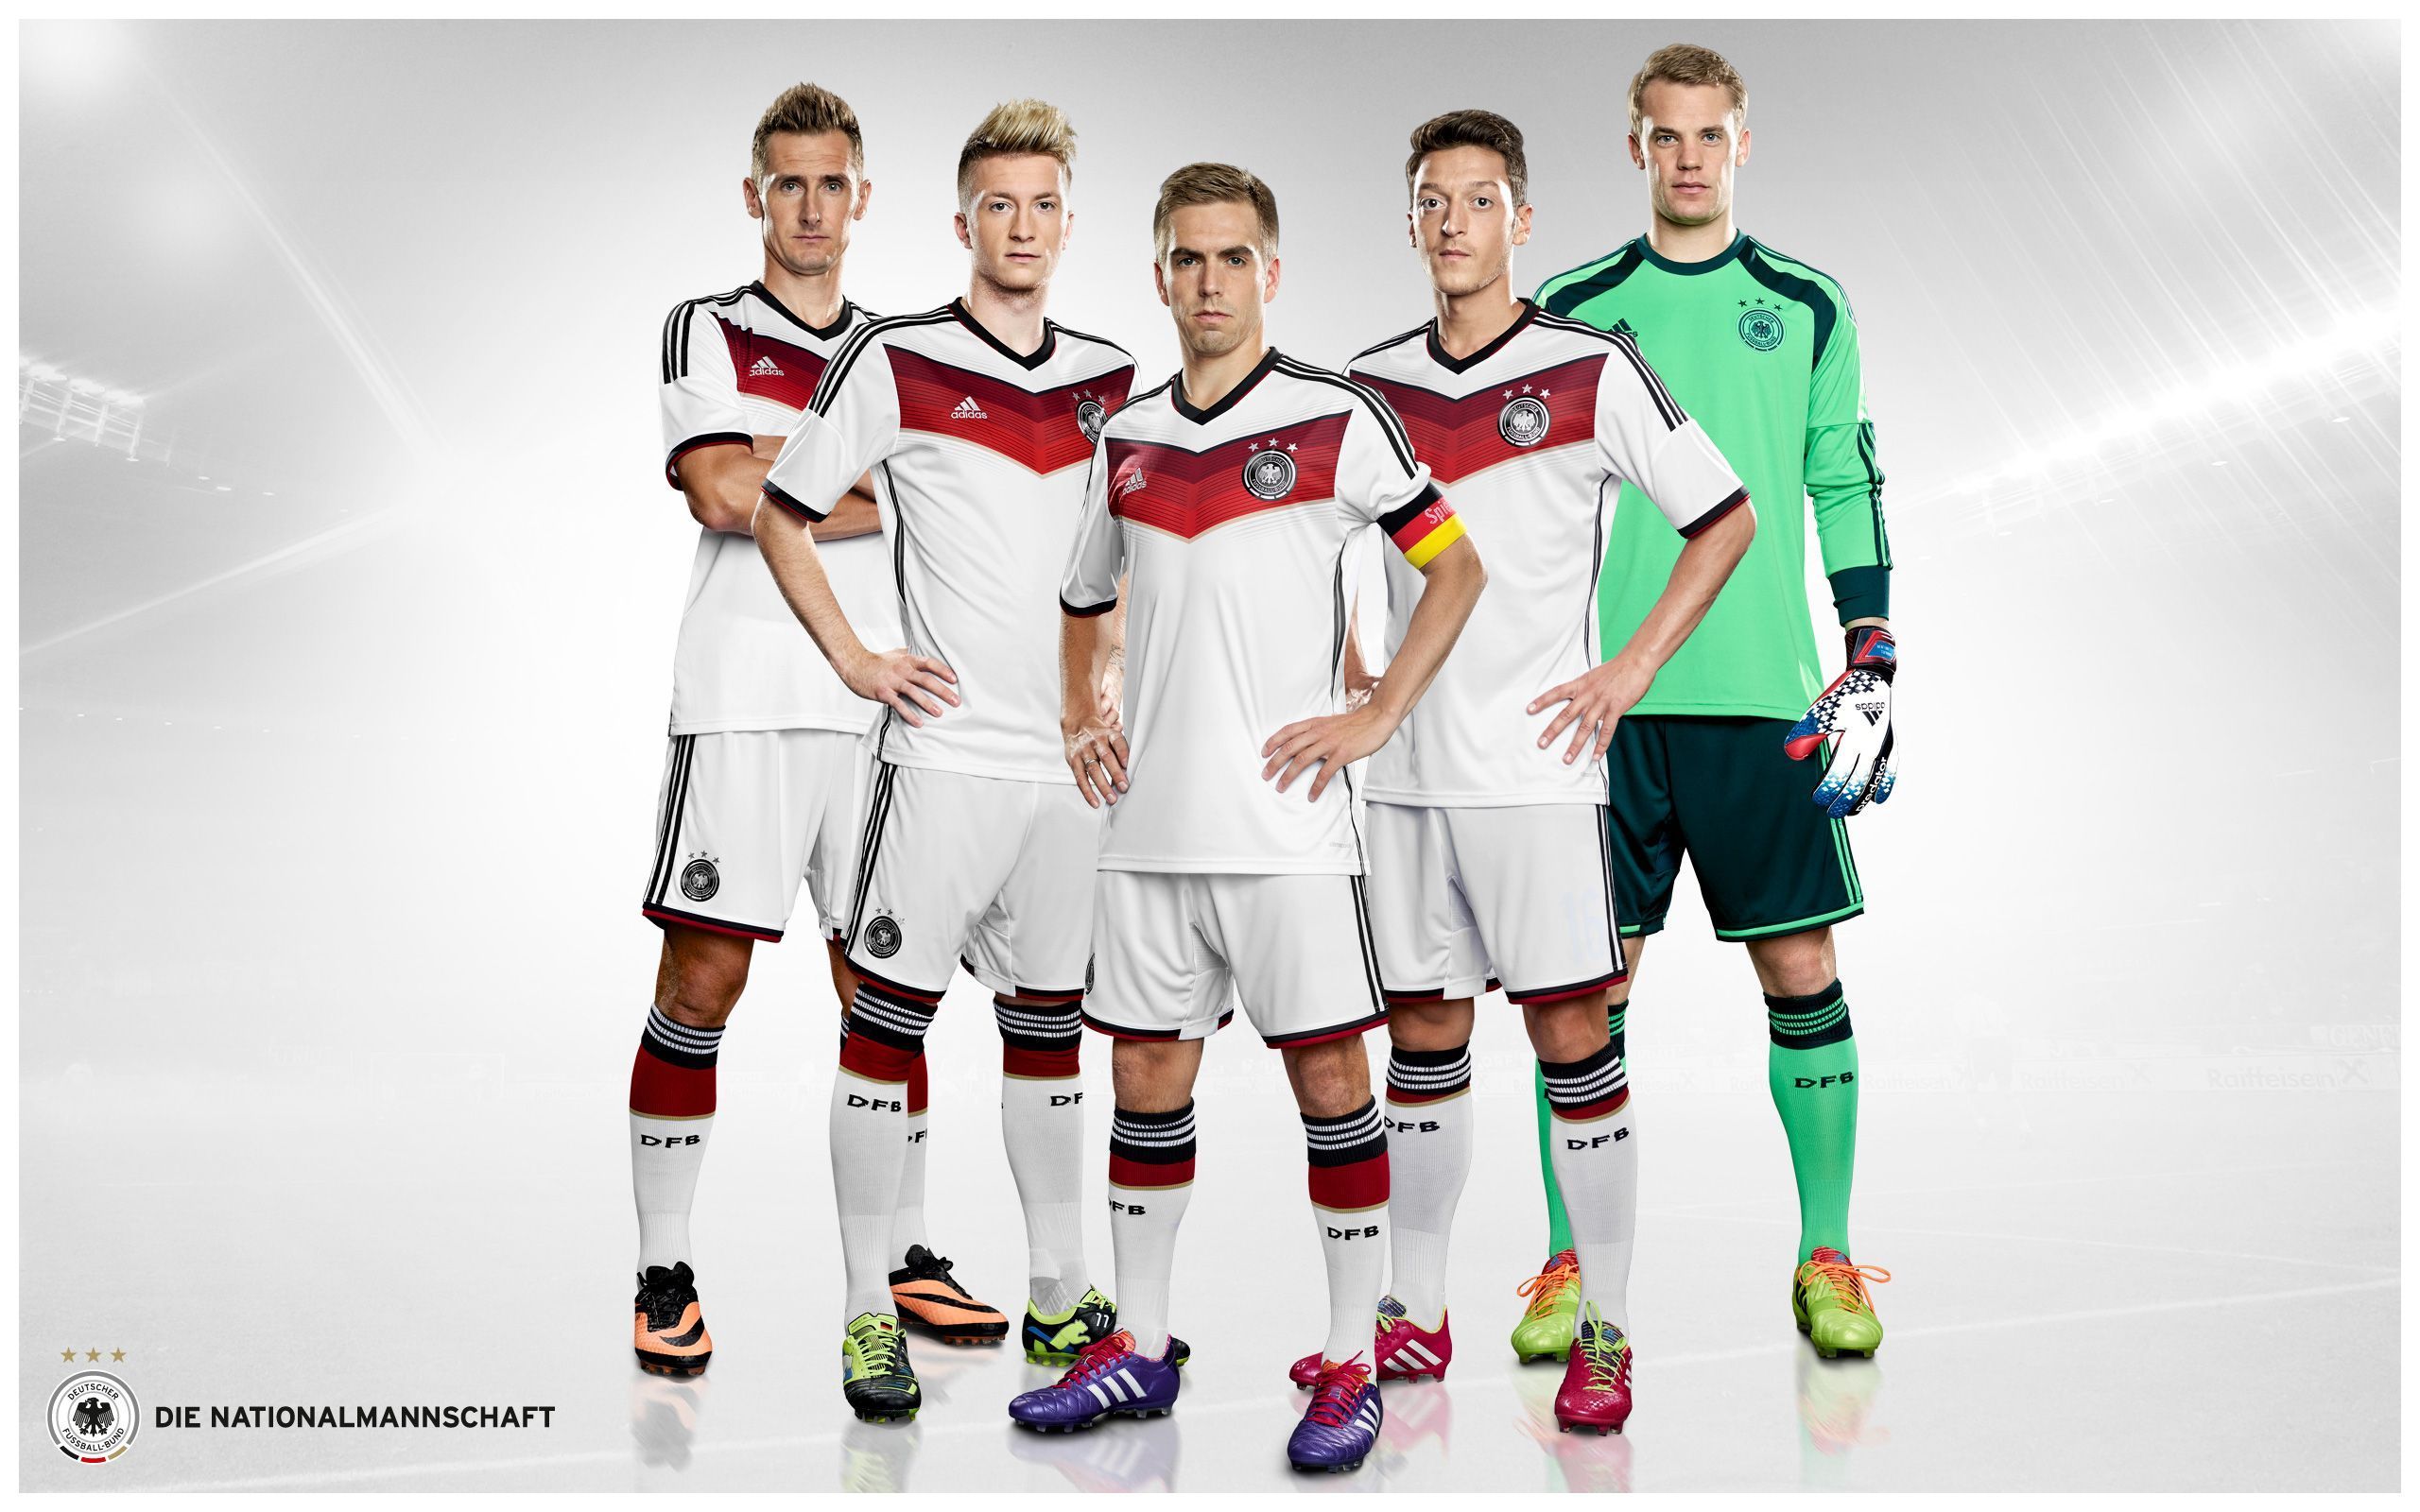 Germany national Team Wallpaper 2560x1600 ID43359